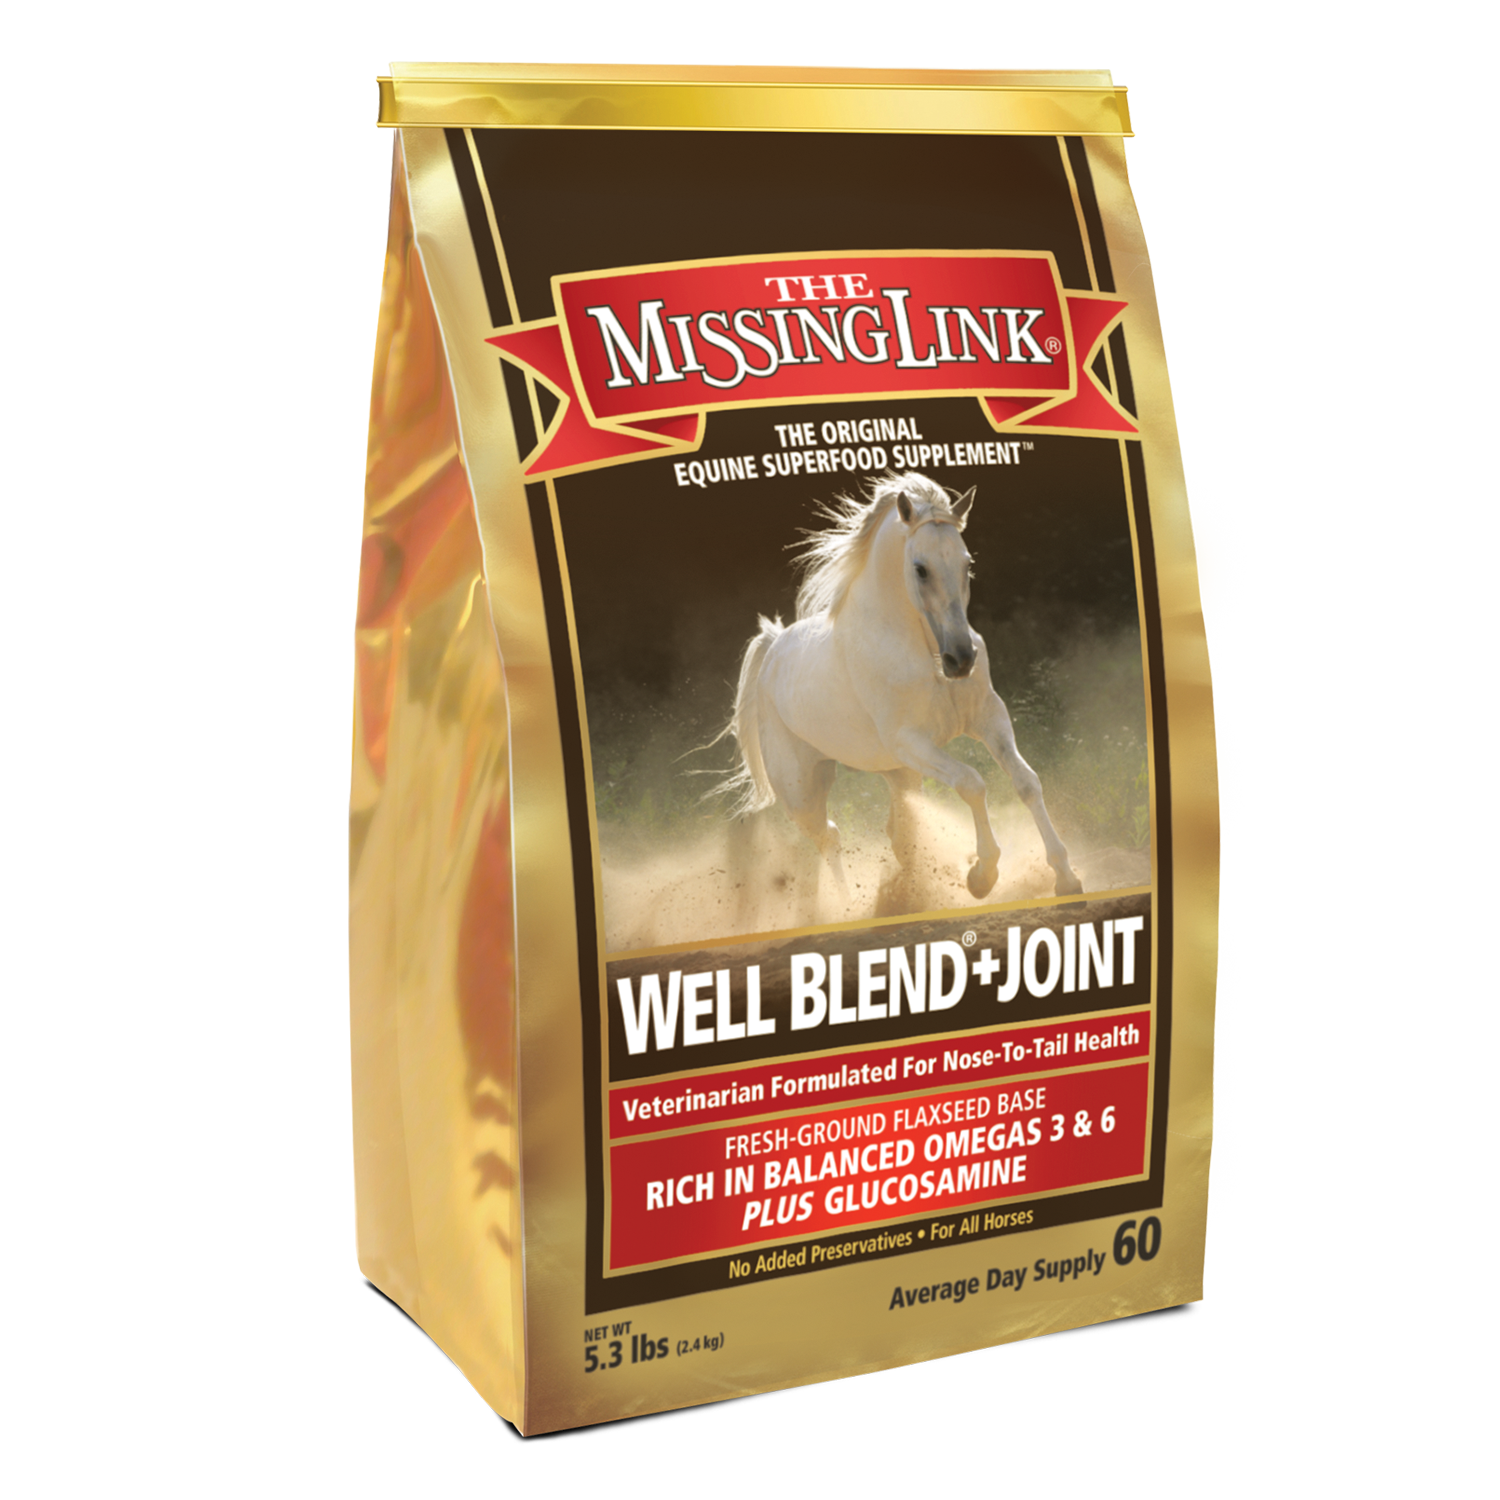 The Missing Link Original Equine Superfood Supplement 5.3 lb bag, 60 day supply.